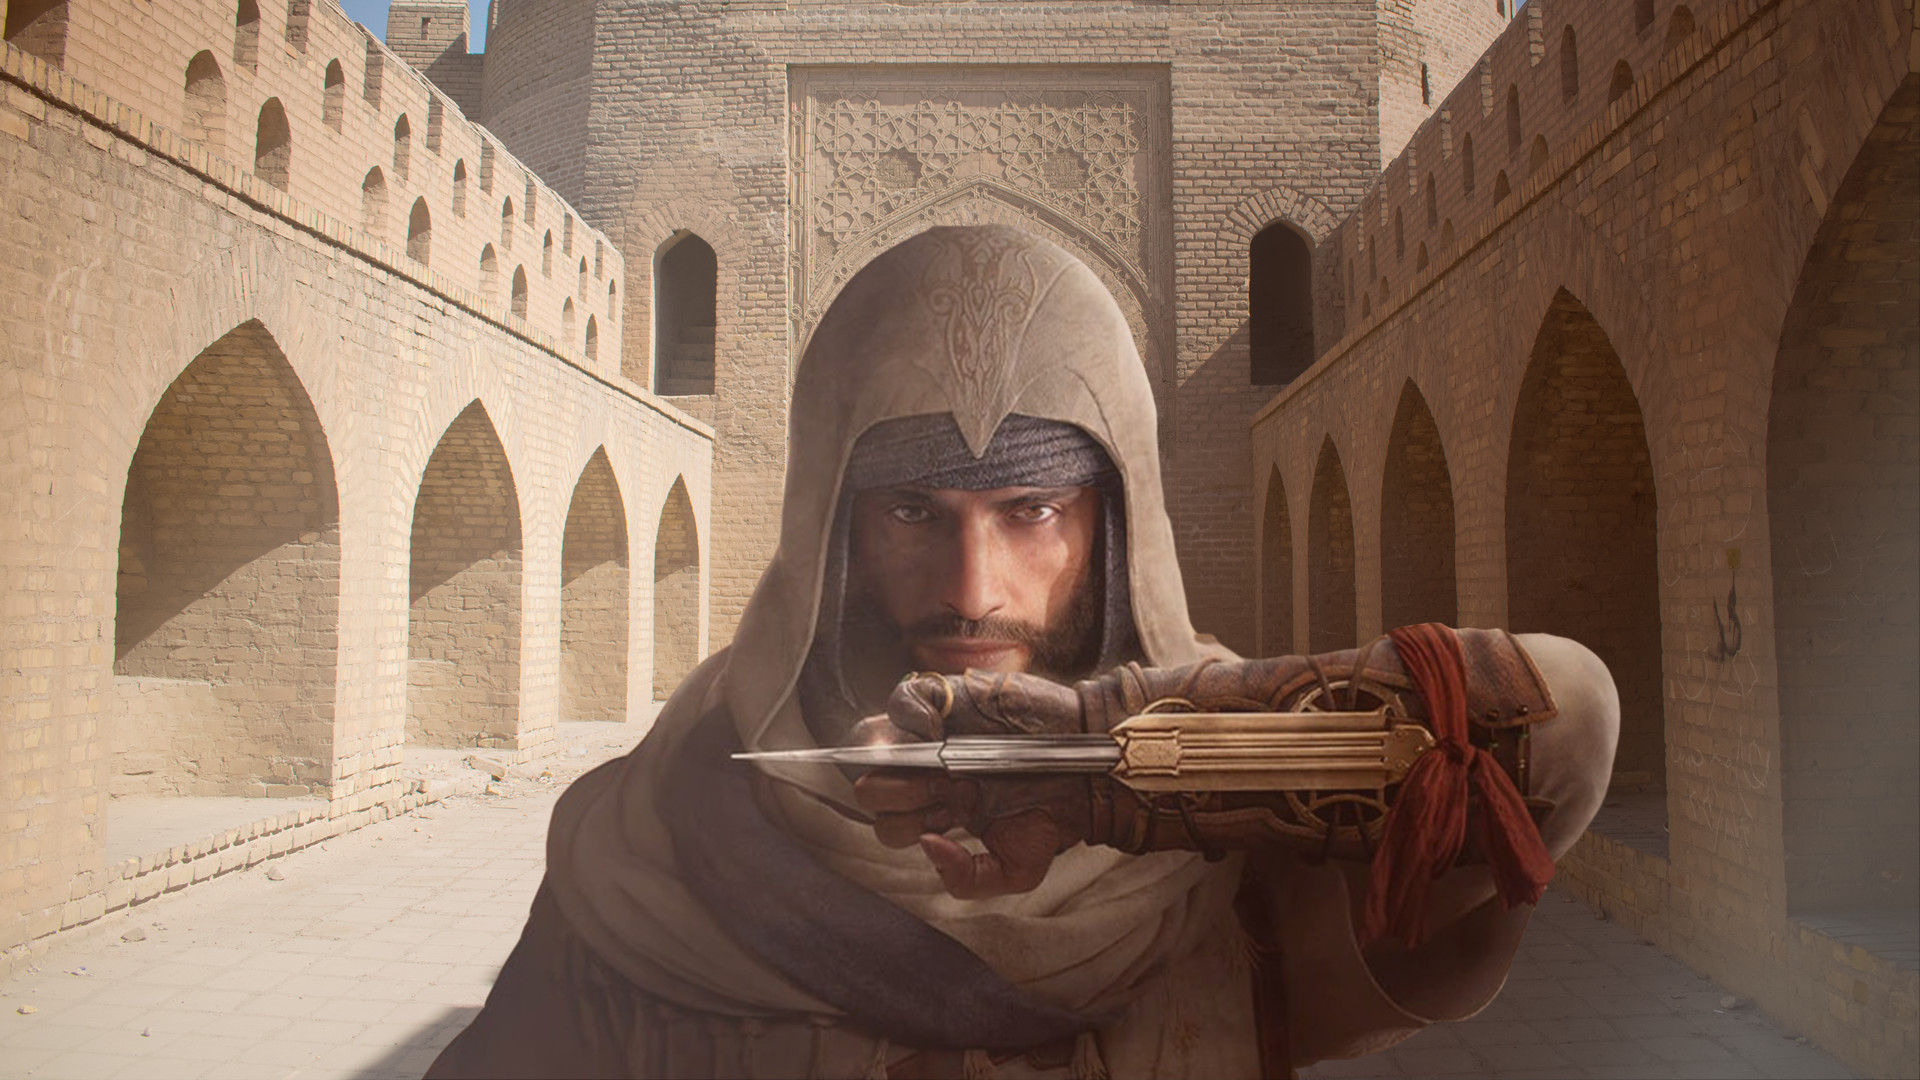 Assassin s Creed Mirage é cinco vezes menor que Valhalla